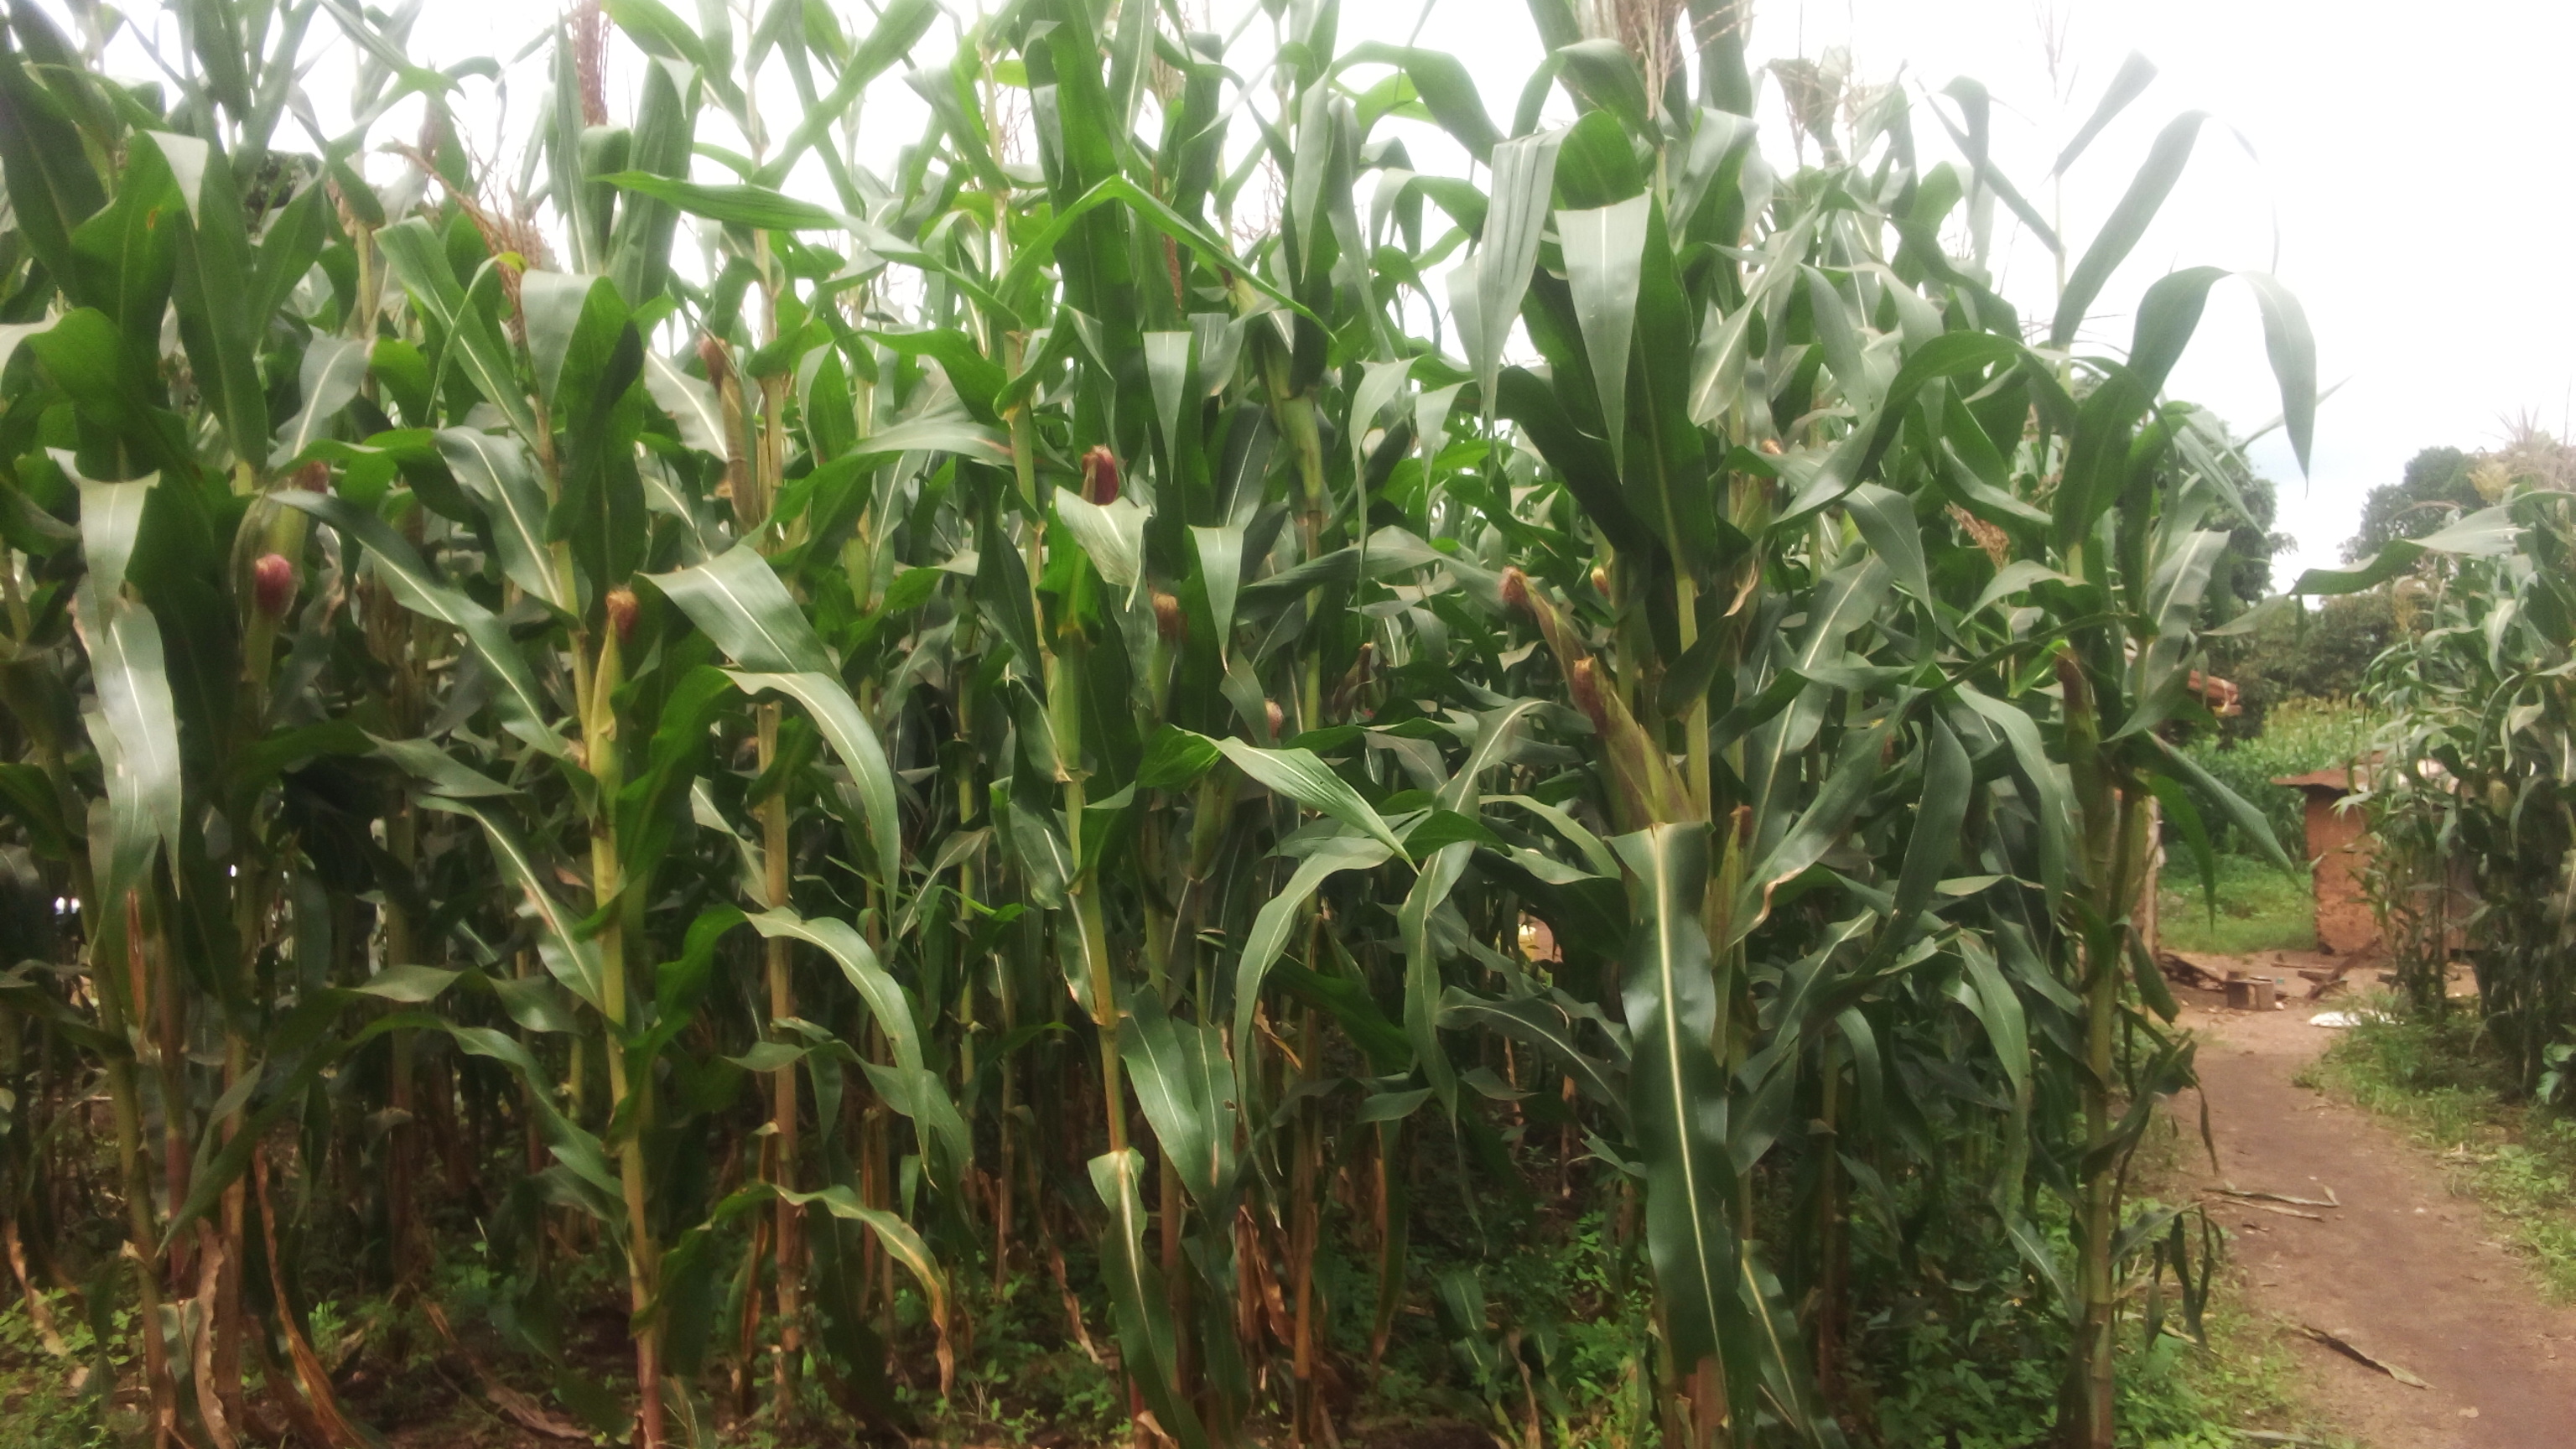 Maize garden in mubende district